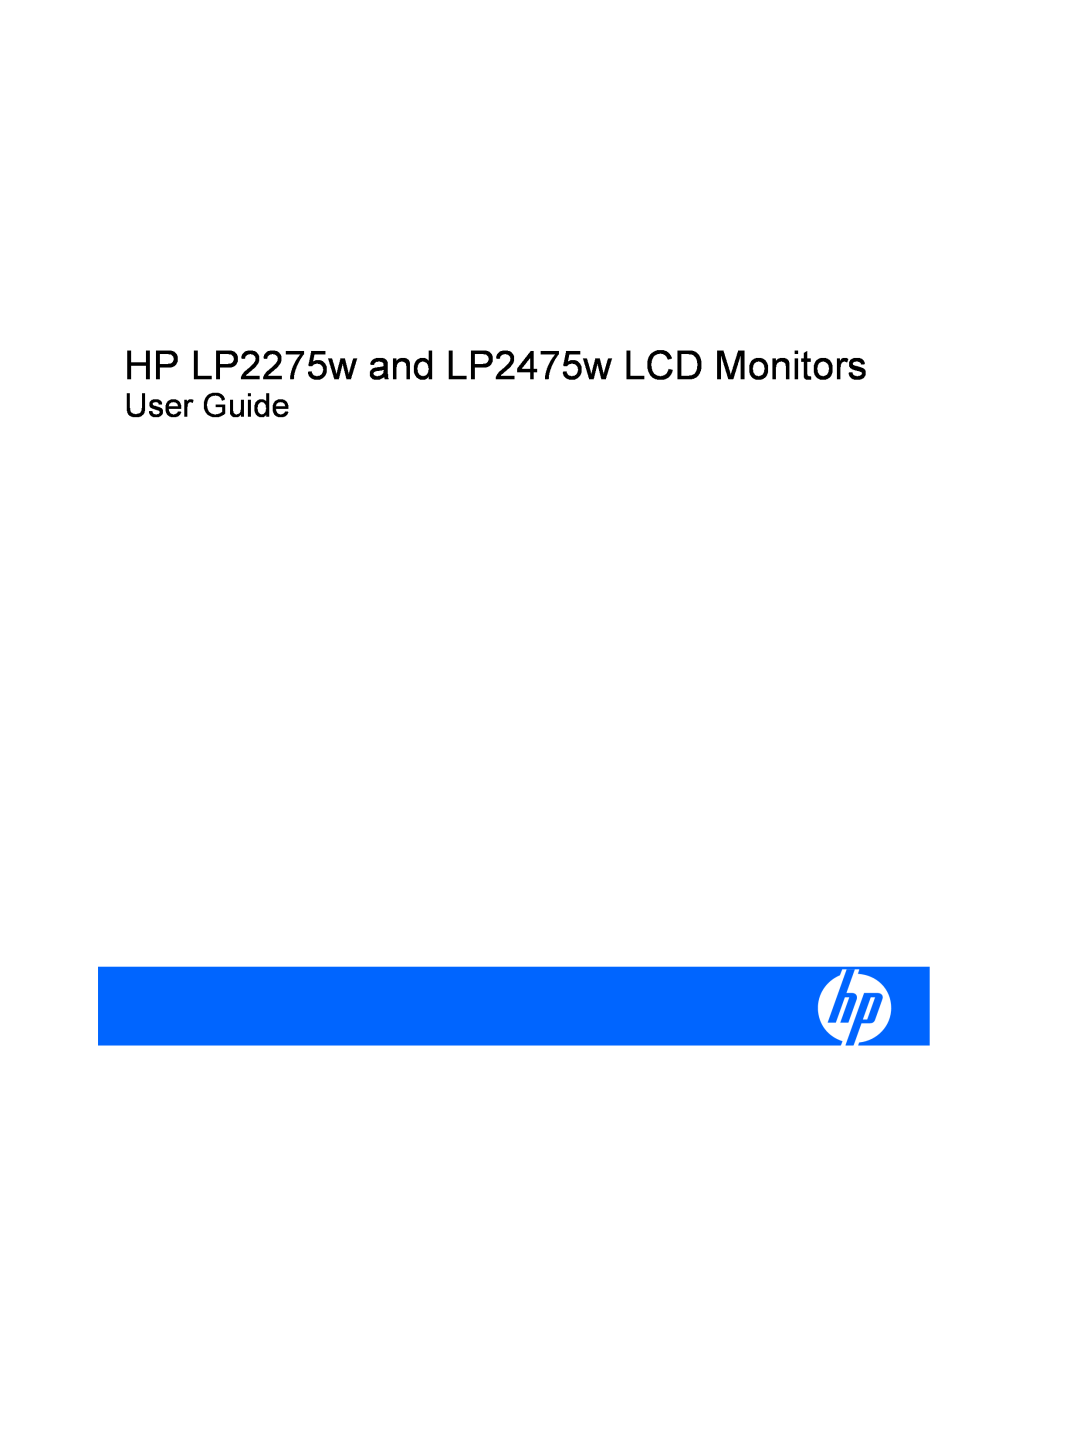 HP manual HP LP2275w and LP2475w LCD Monitors, User Guide 